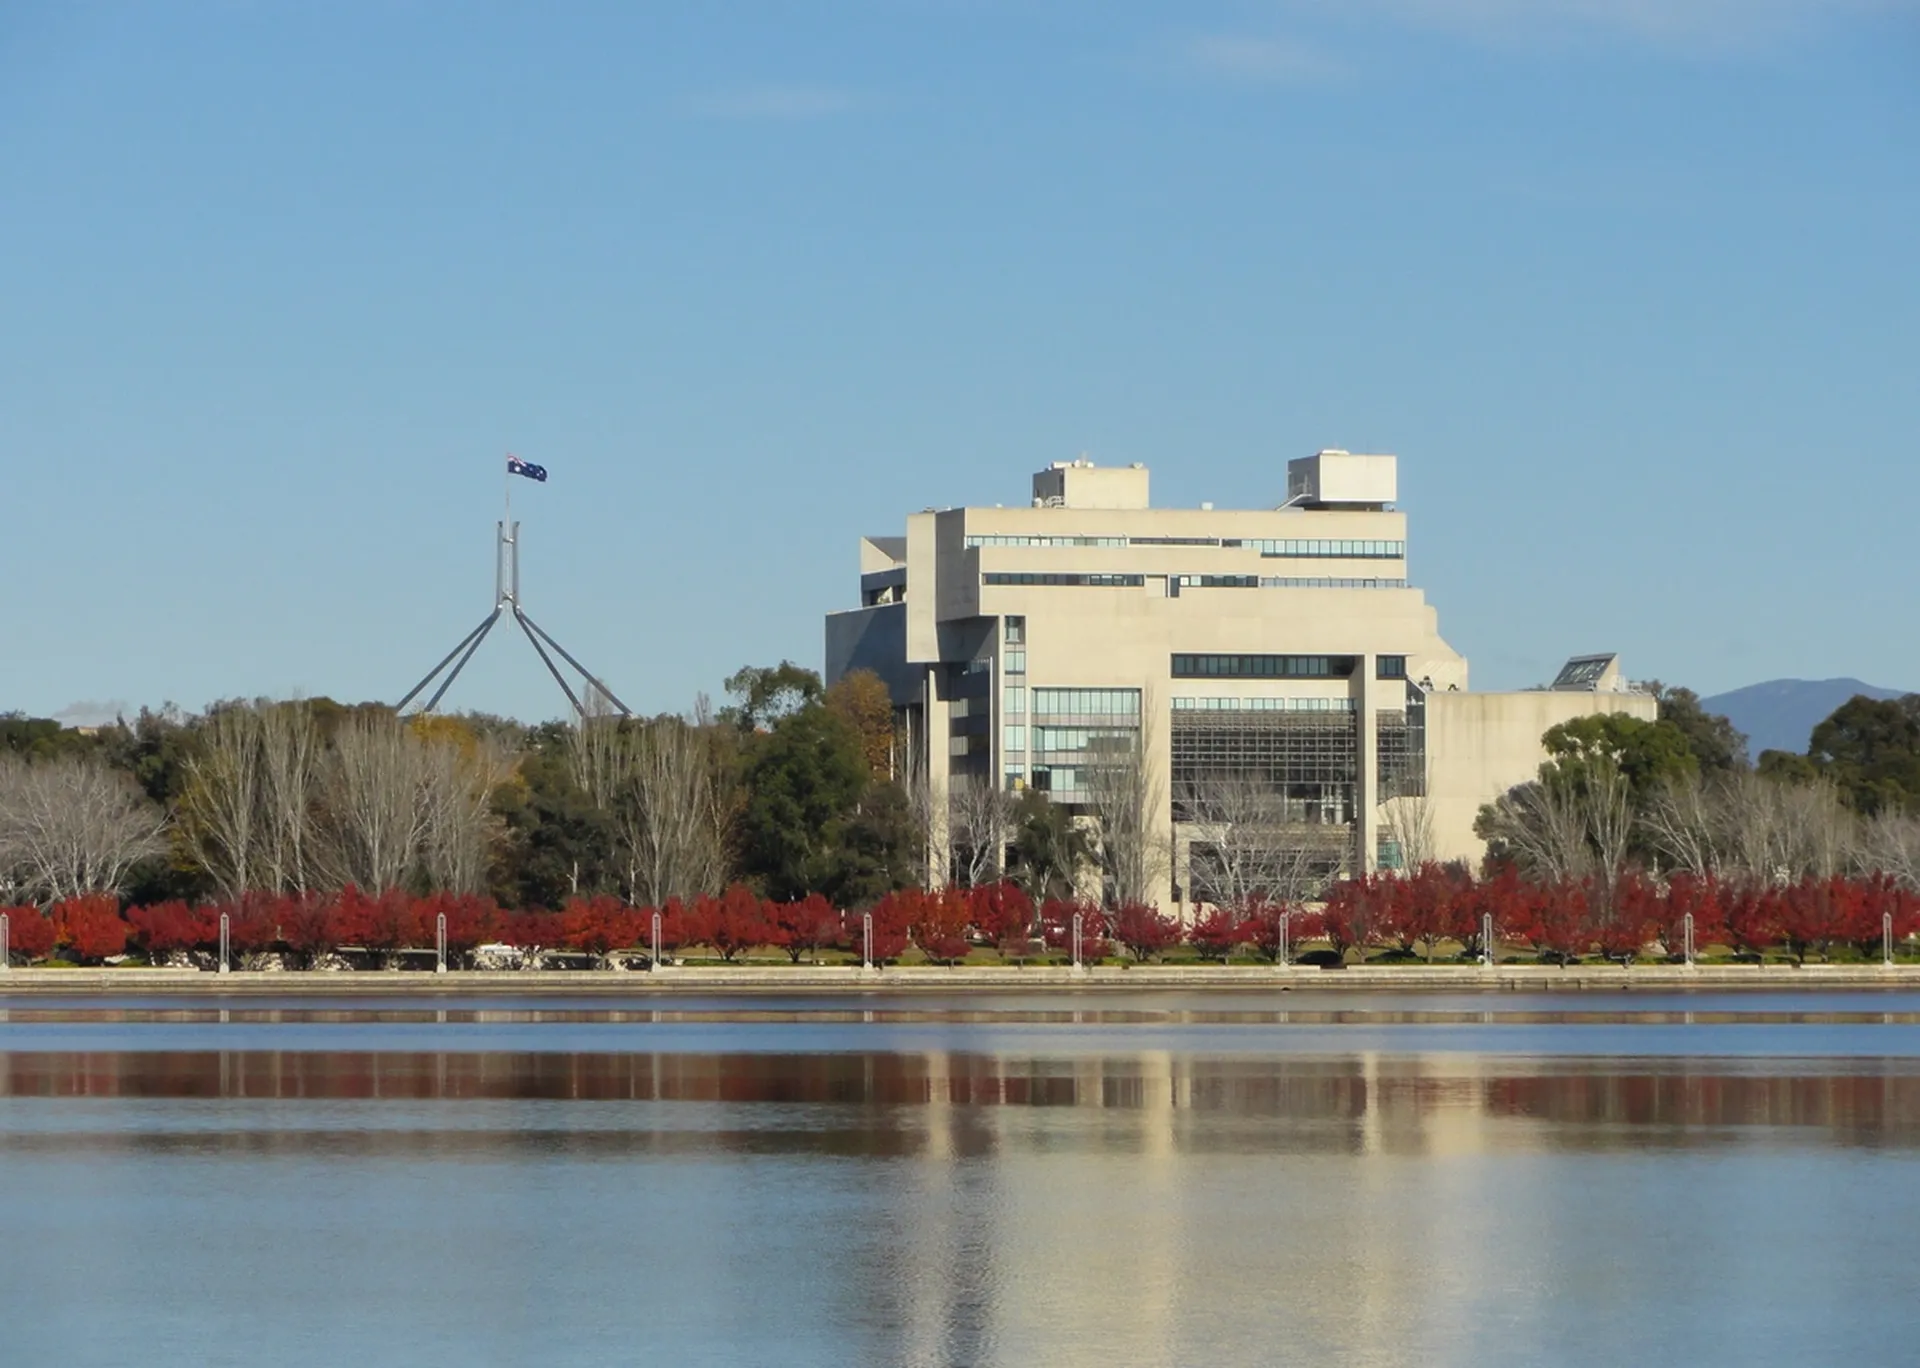 Explore Canberra